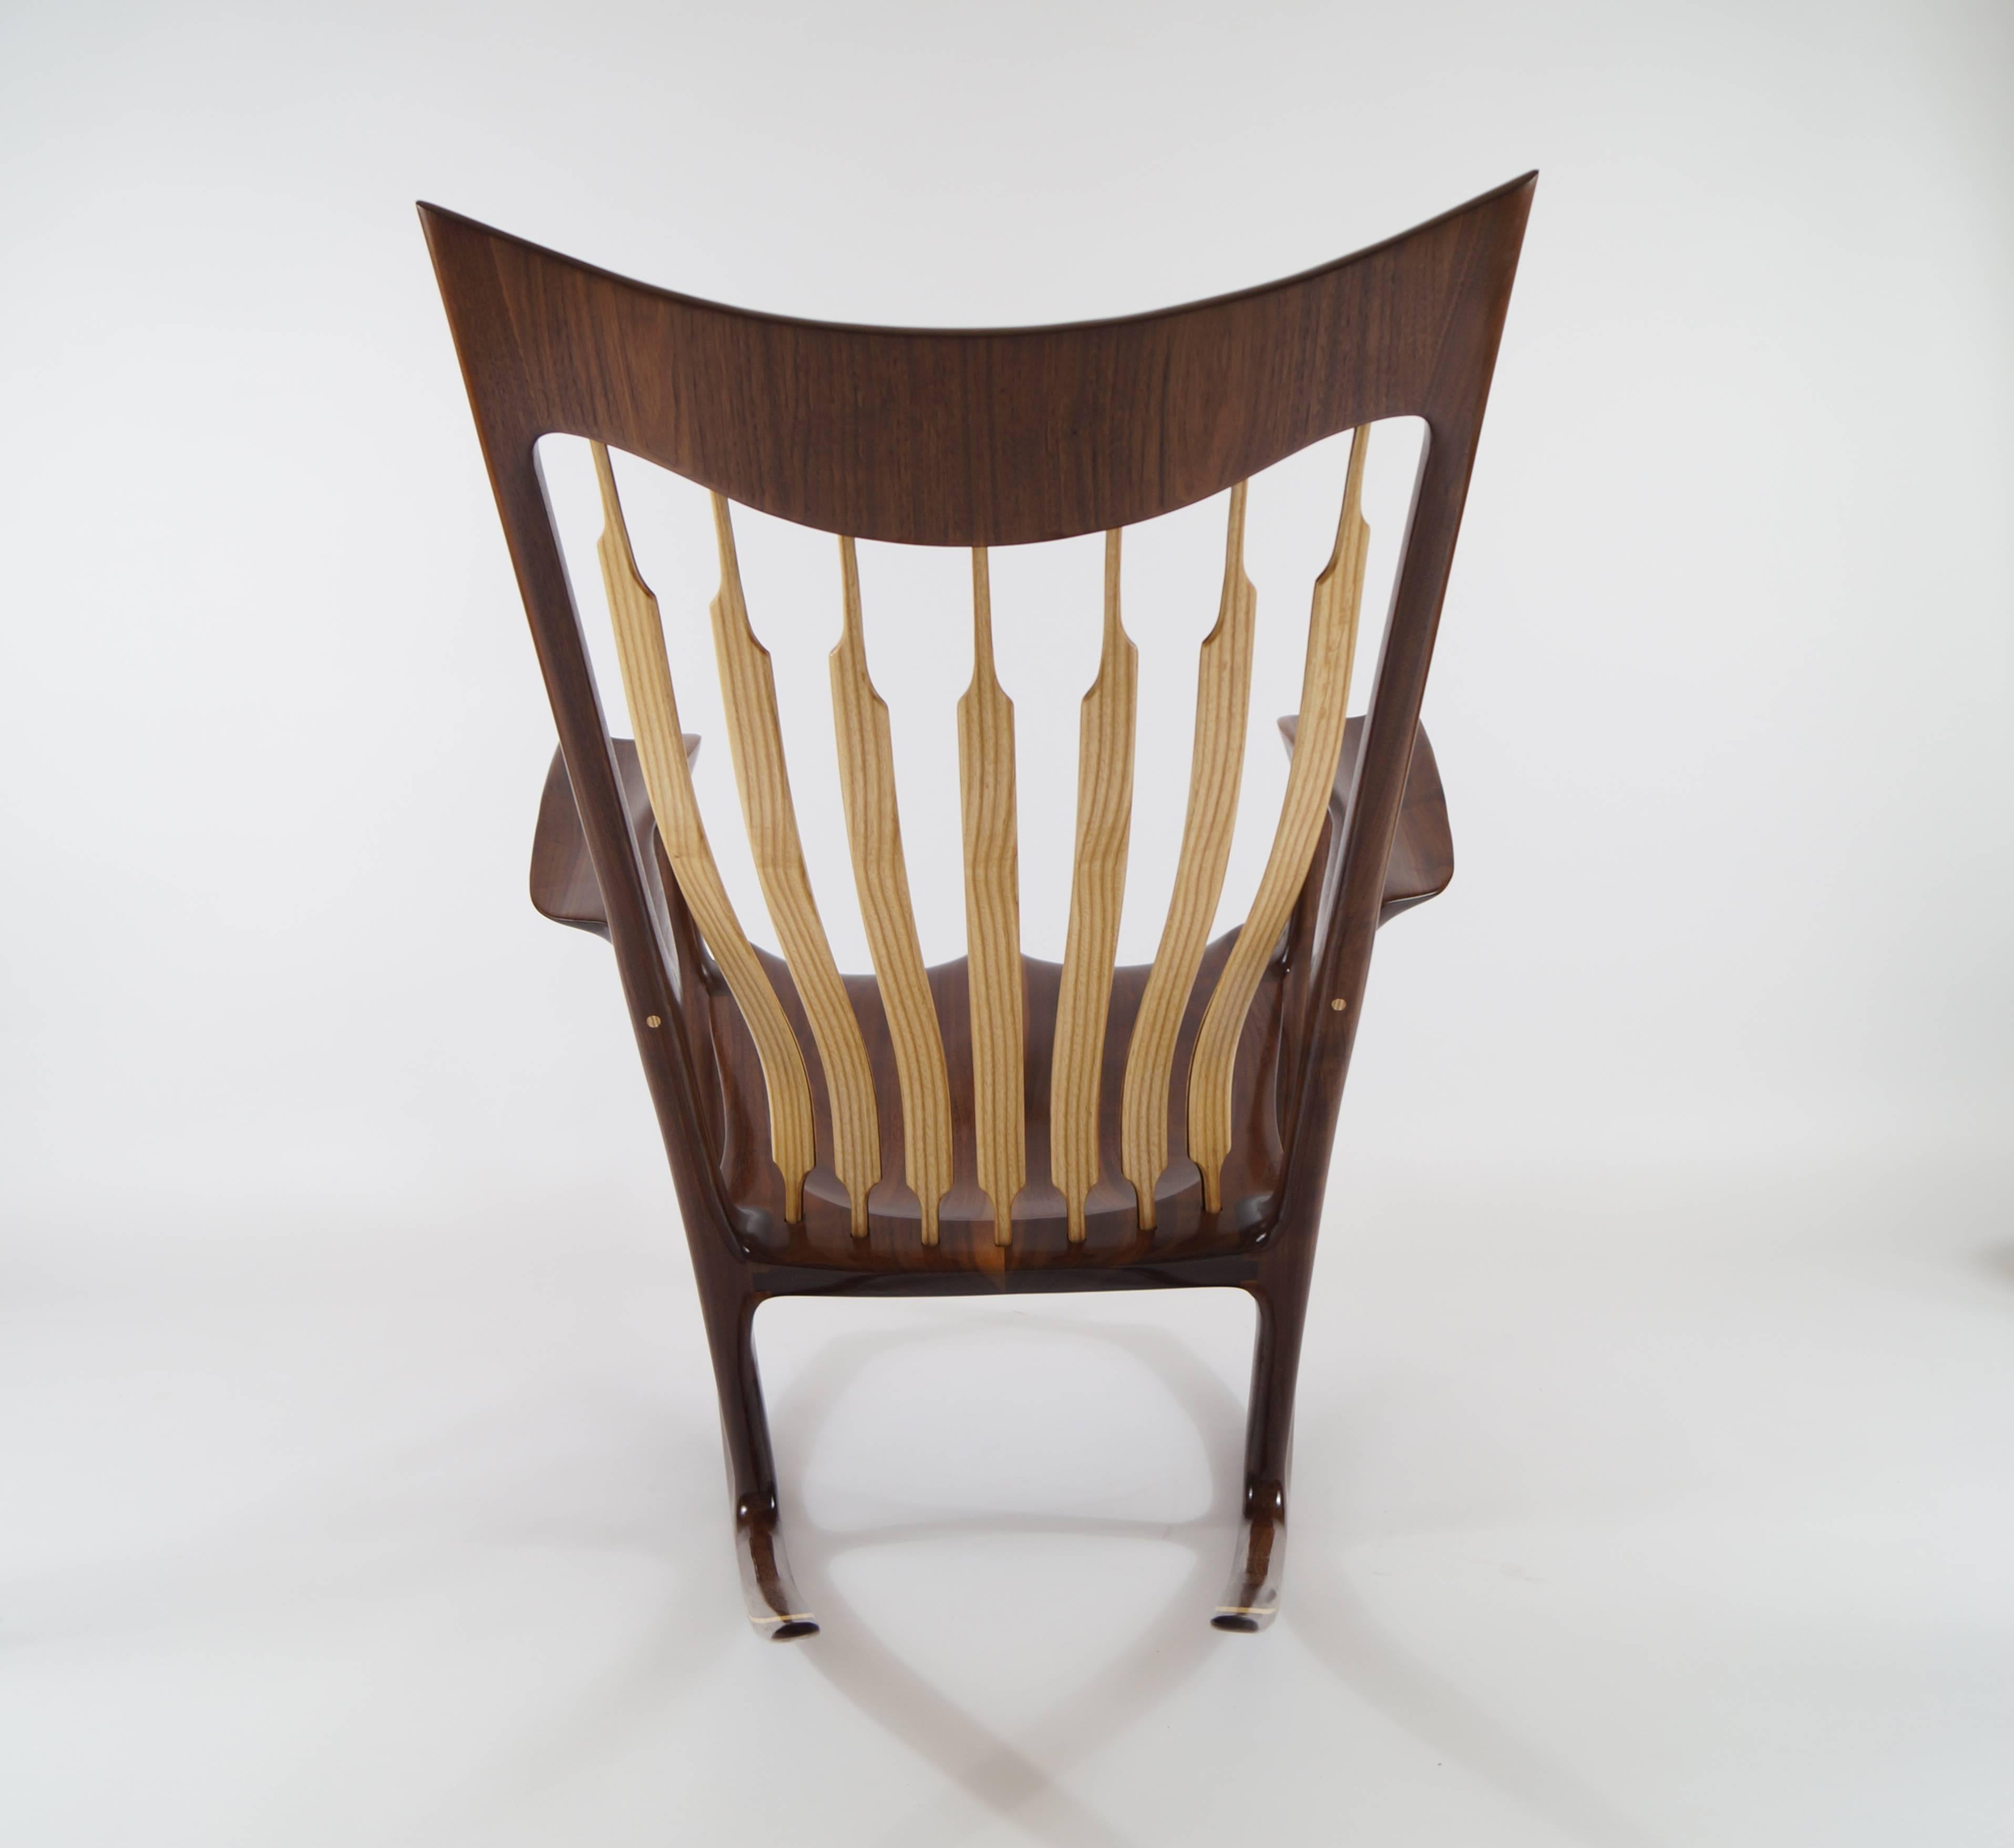 Modern Rocking Chair, Handcrafted and Designed by Morten Stenbaek